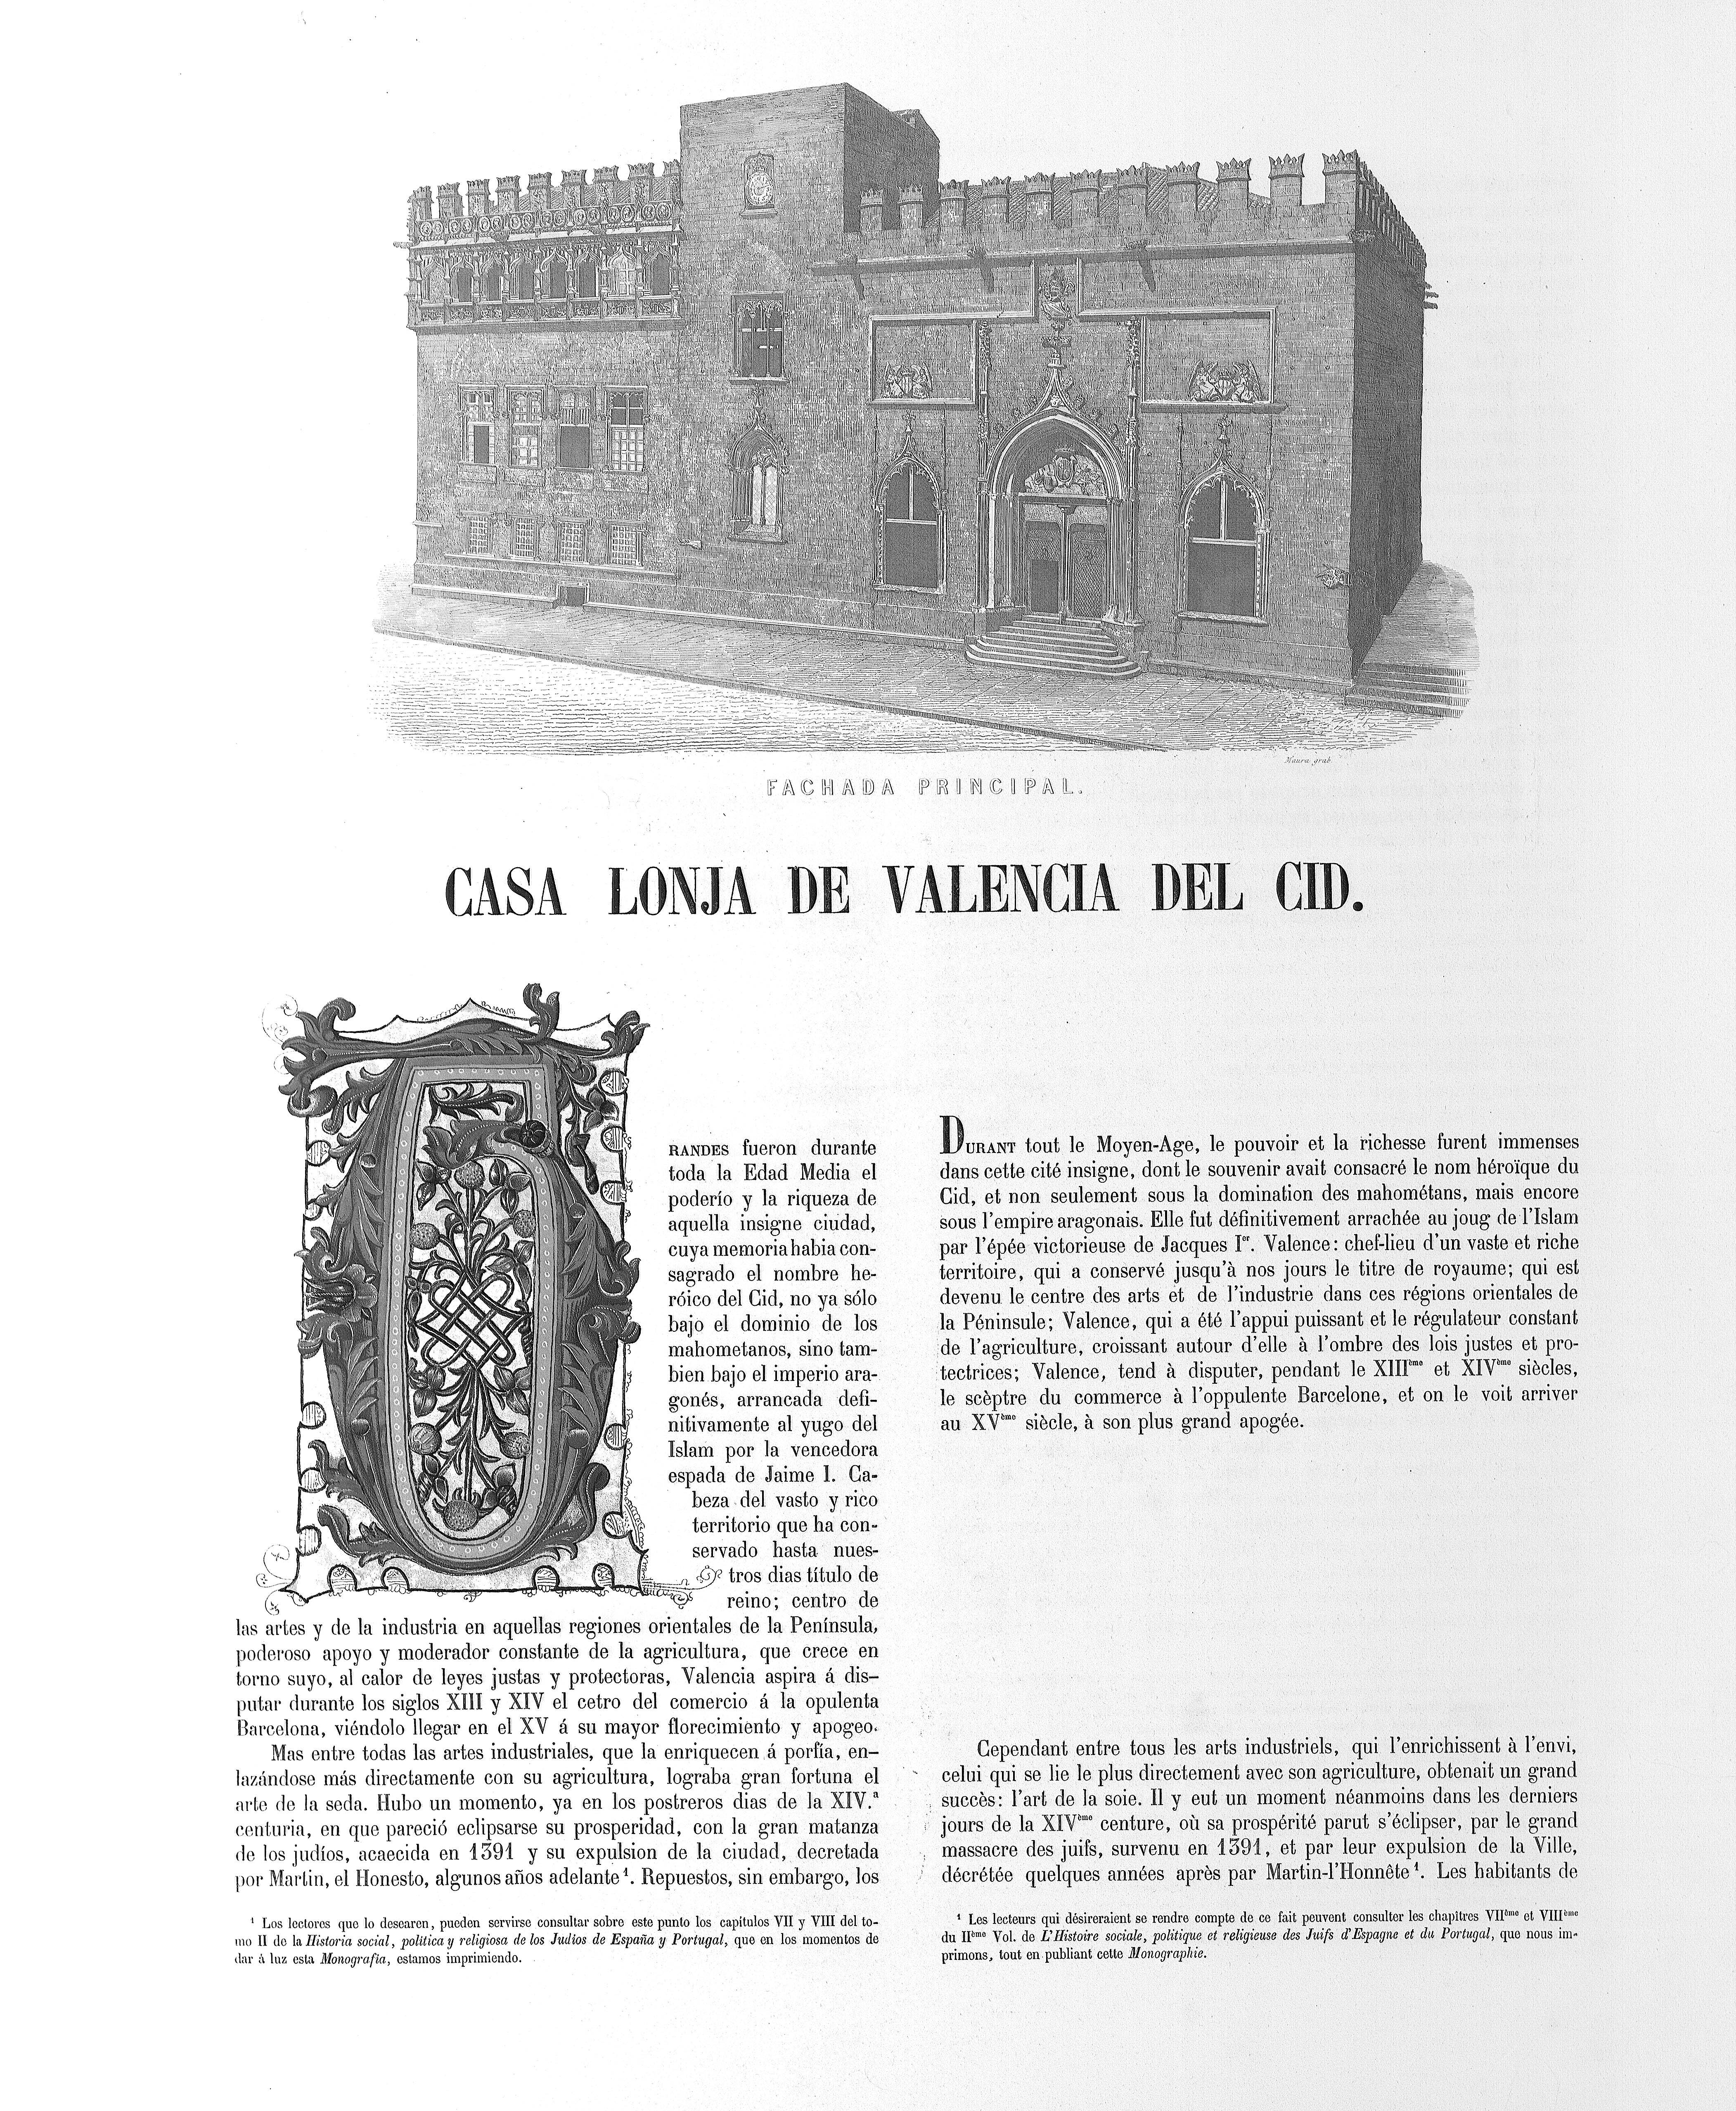 Casa lonja de Valencia del Cid